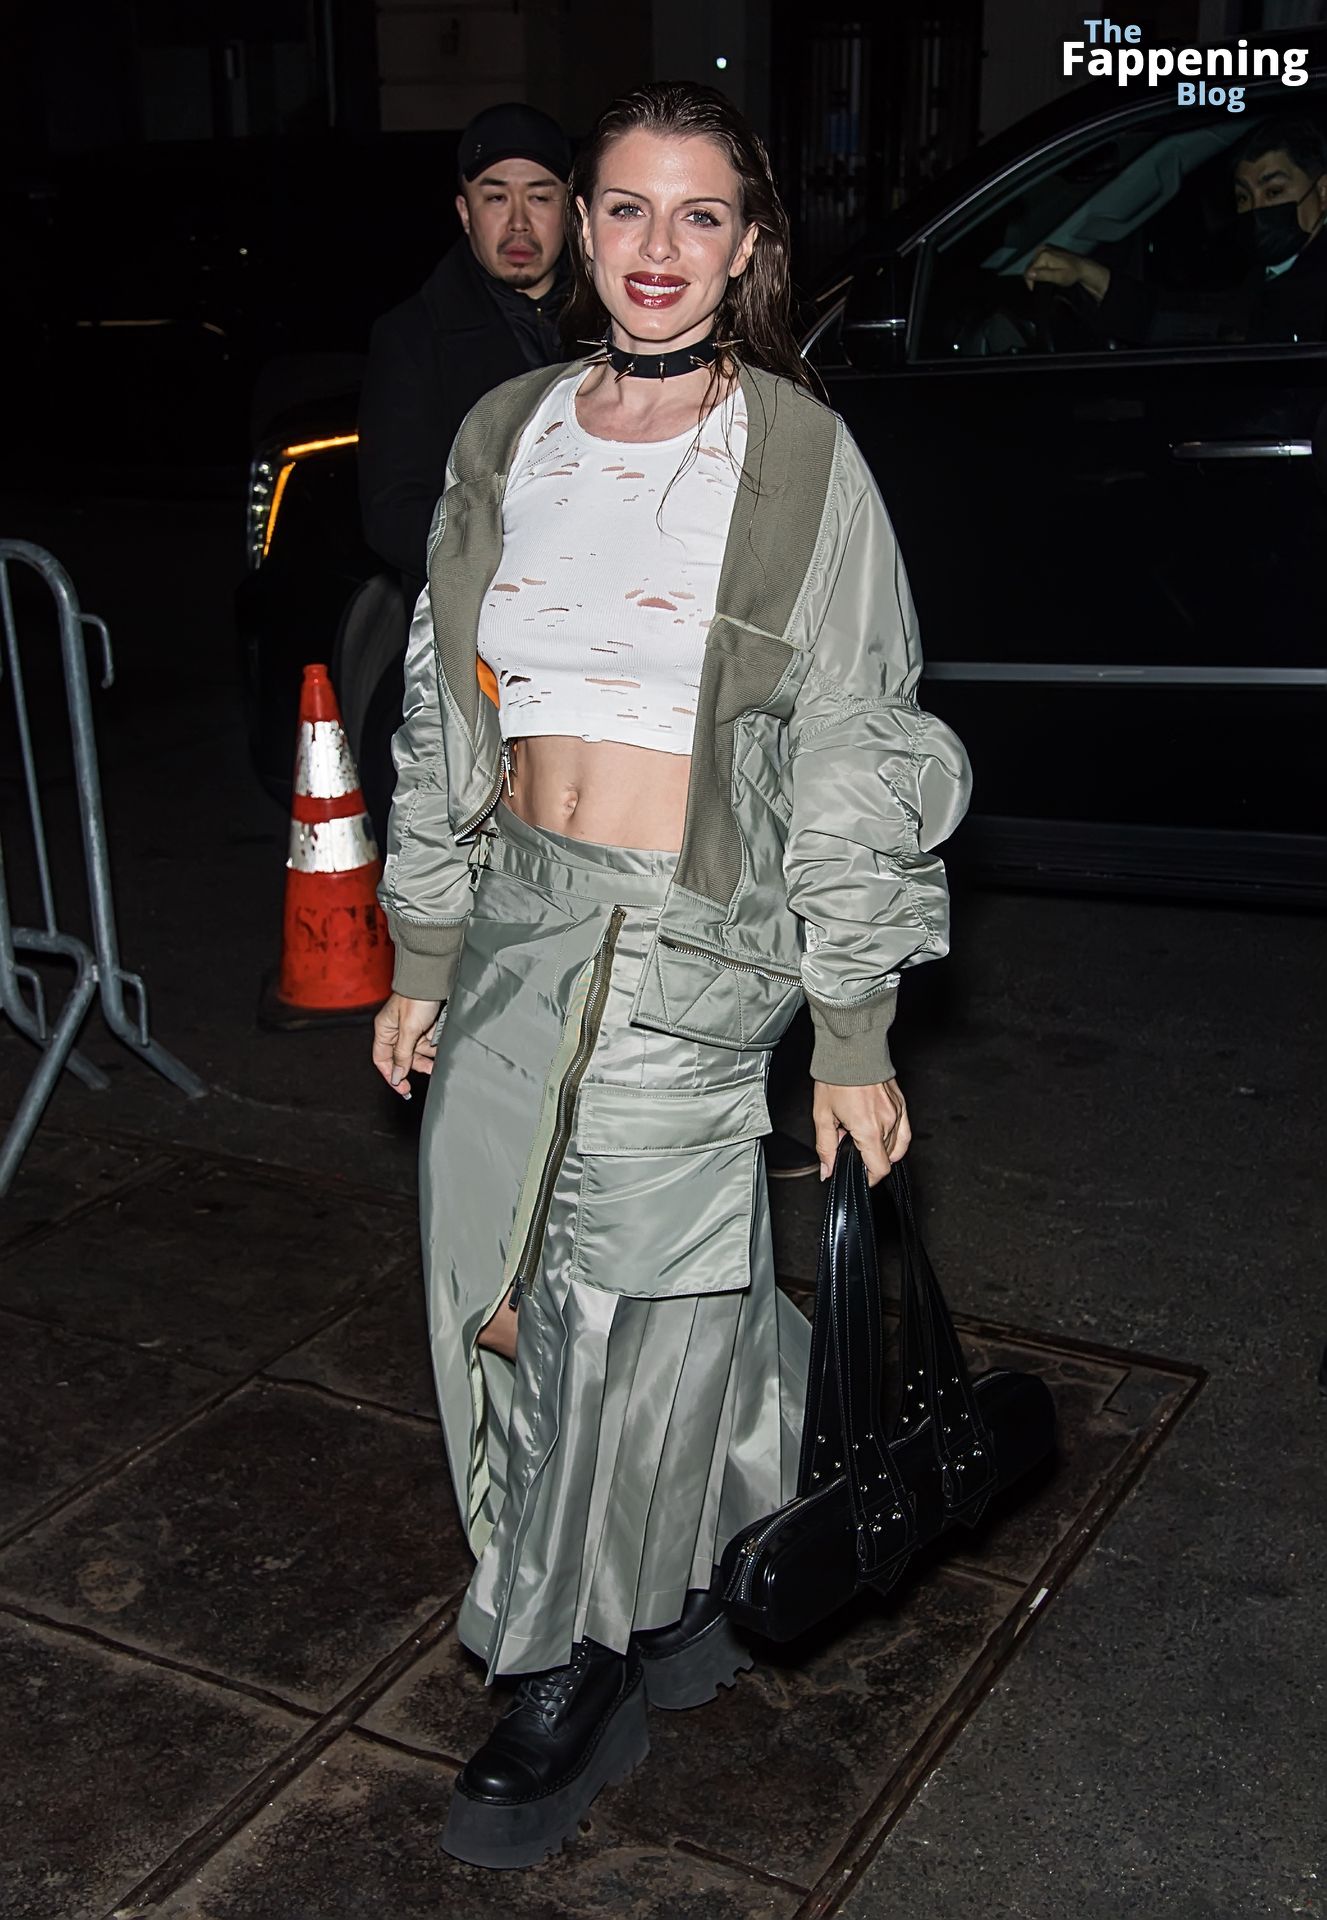 Julia Fox Poses Braless at the Saks Fifth Avenue’s New York Fashion Week Kickoff Party (20 Photos)